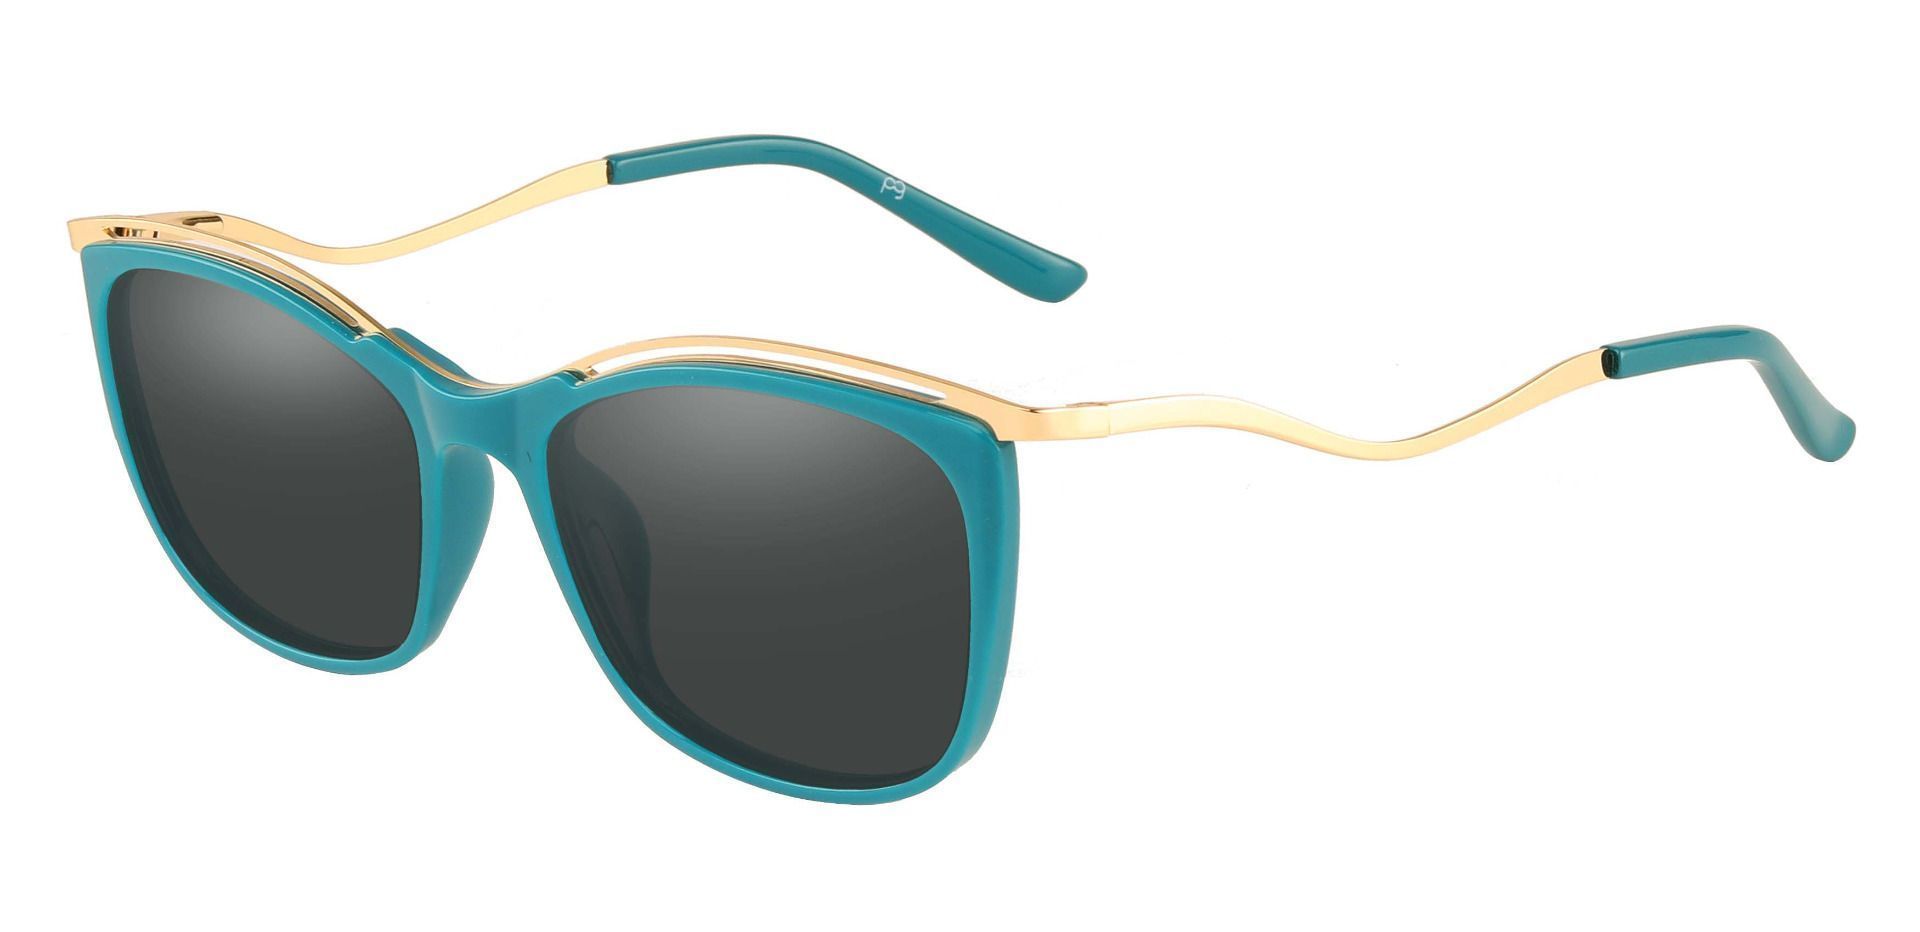 Enola Cat Eye Non-Rx Sunglasses - Green Frame With Gray Lenses